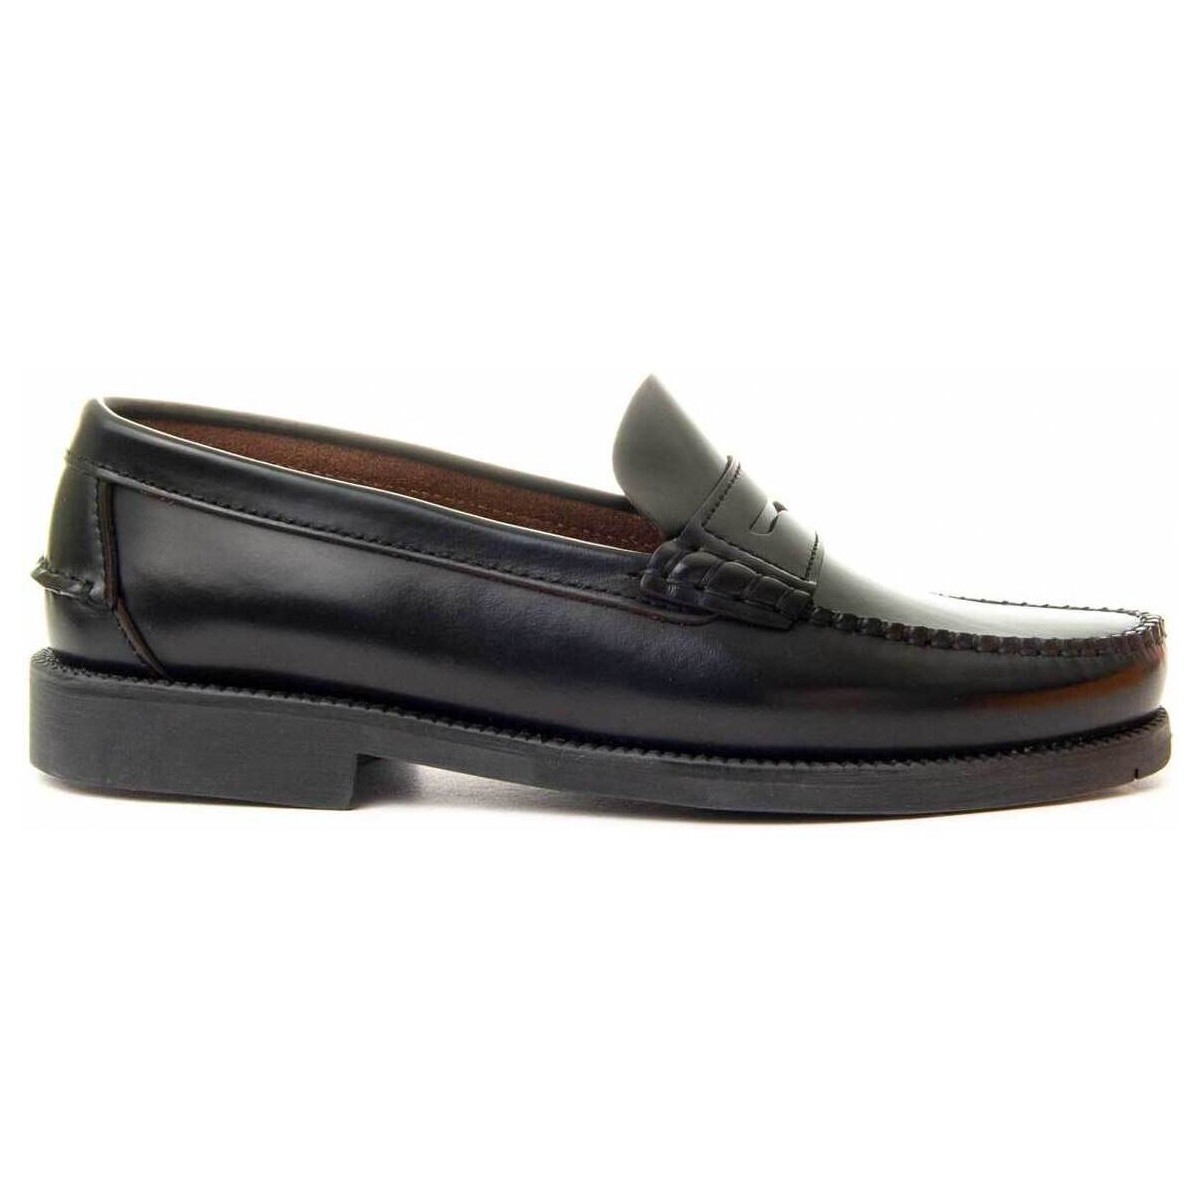 Chaussures Homme Mocassins Purapiel 89154 Noir